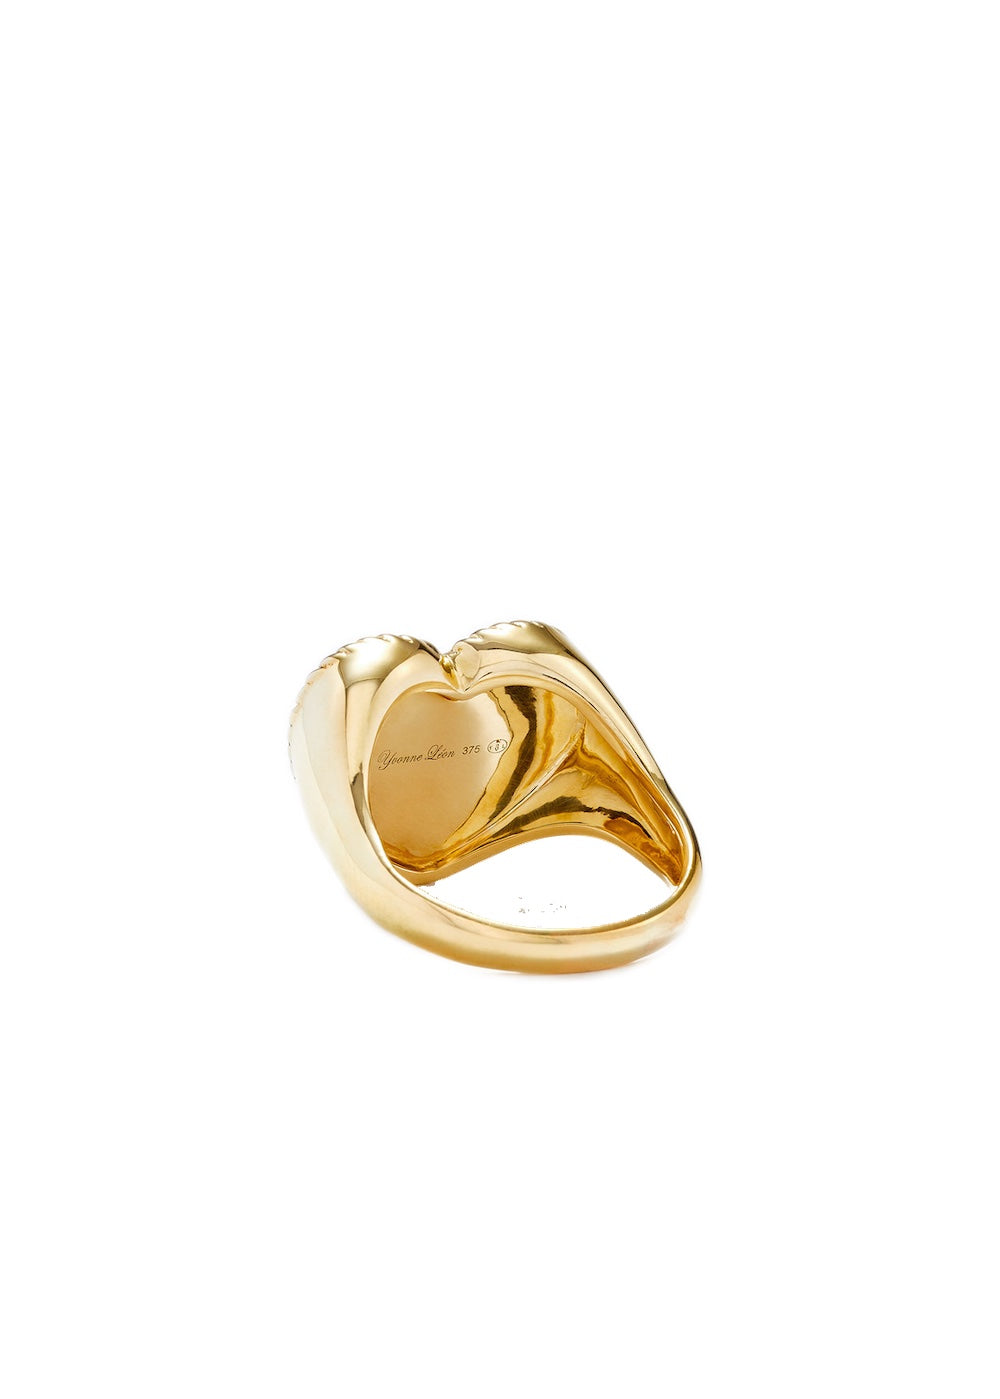 Chevalière Coeur Turquoise 9k yellow gold diamond signet ring